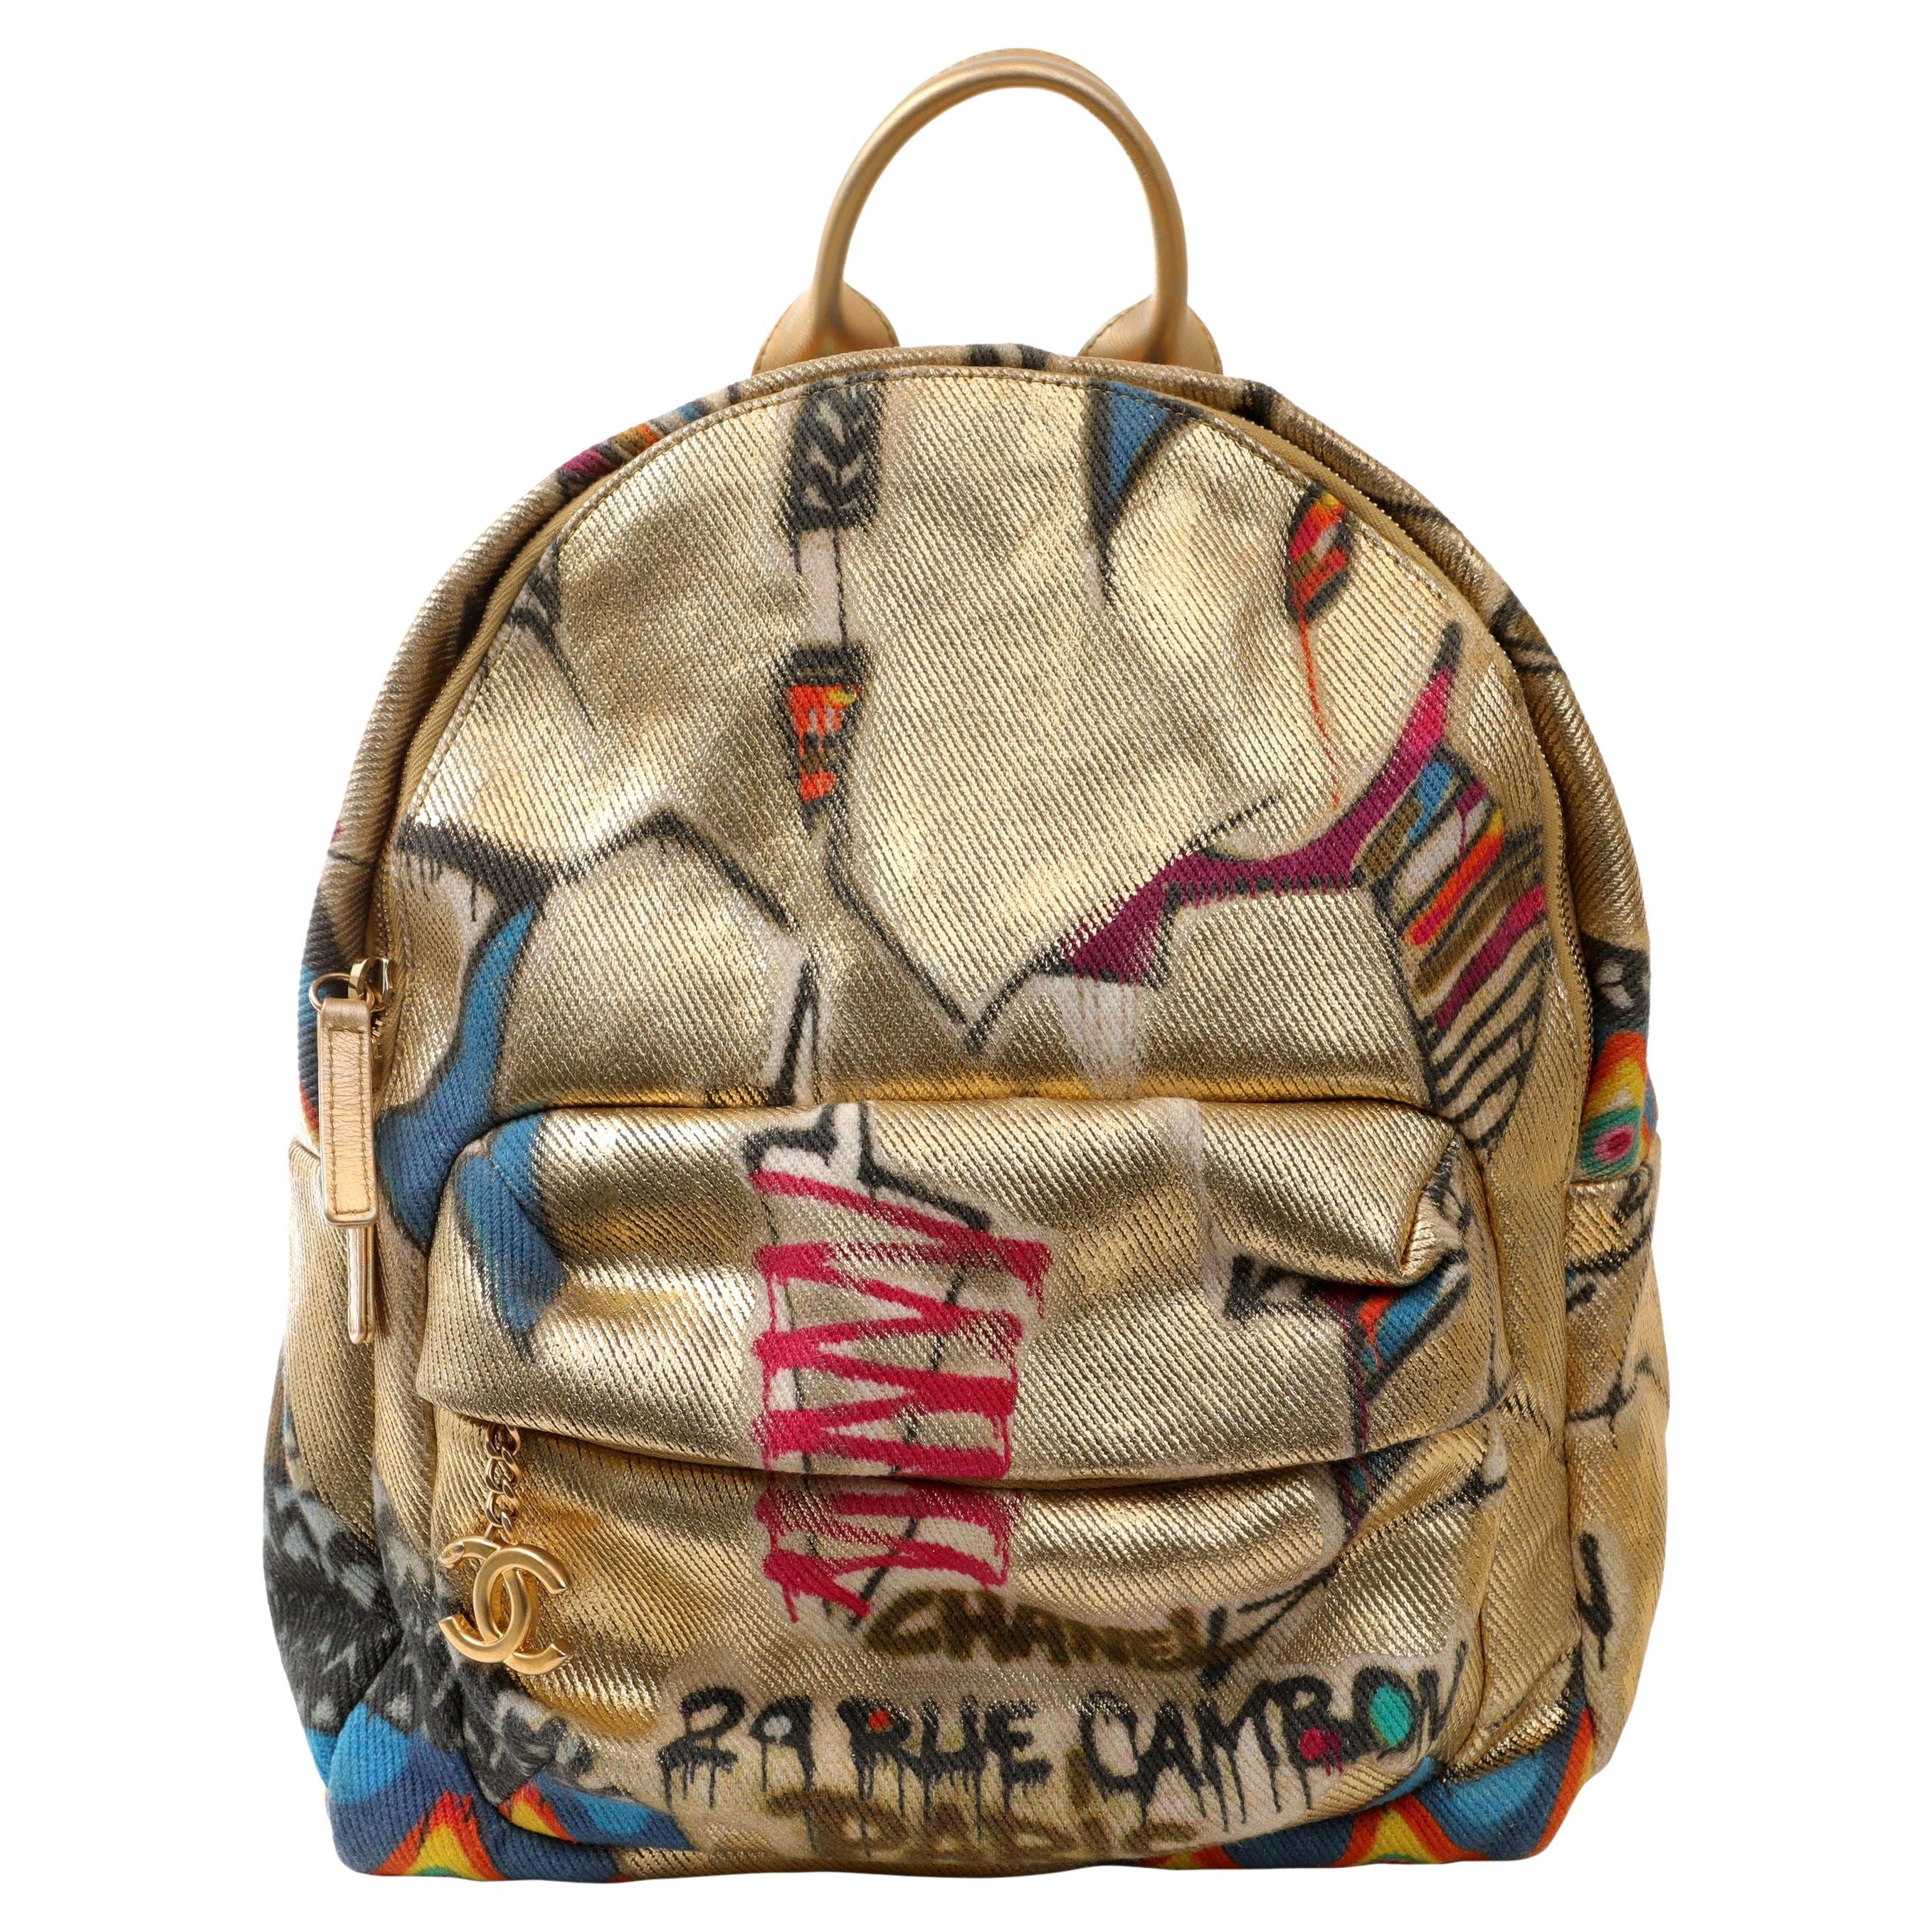 Chanel Graffiti Backpack - 3 For Sale on 1stDibs